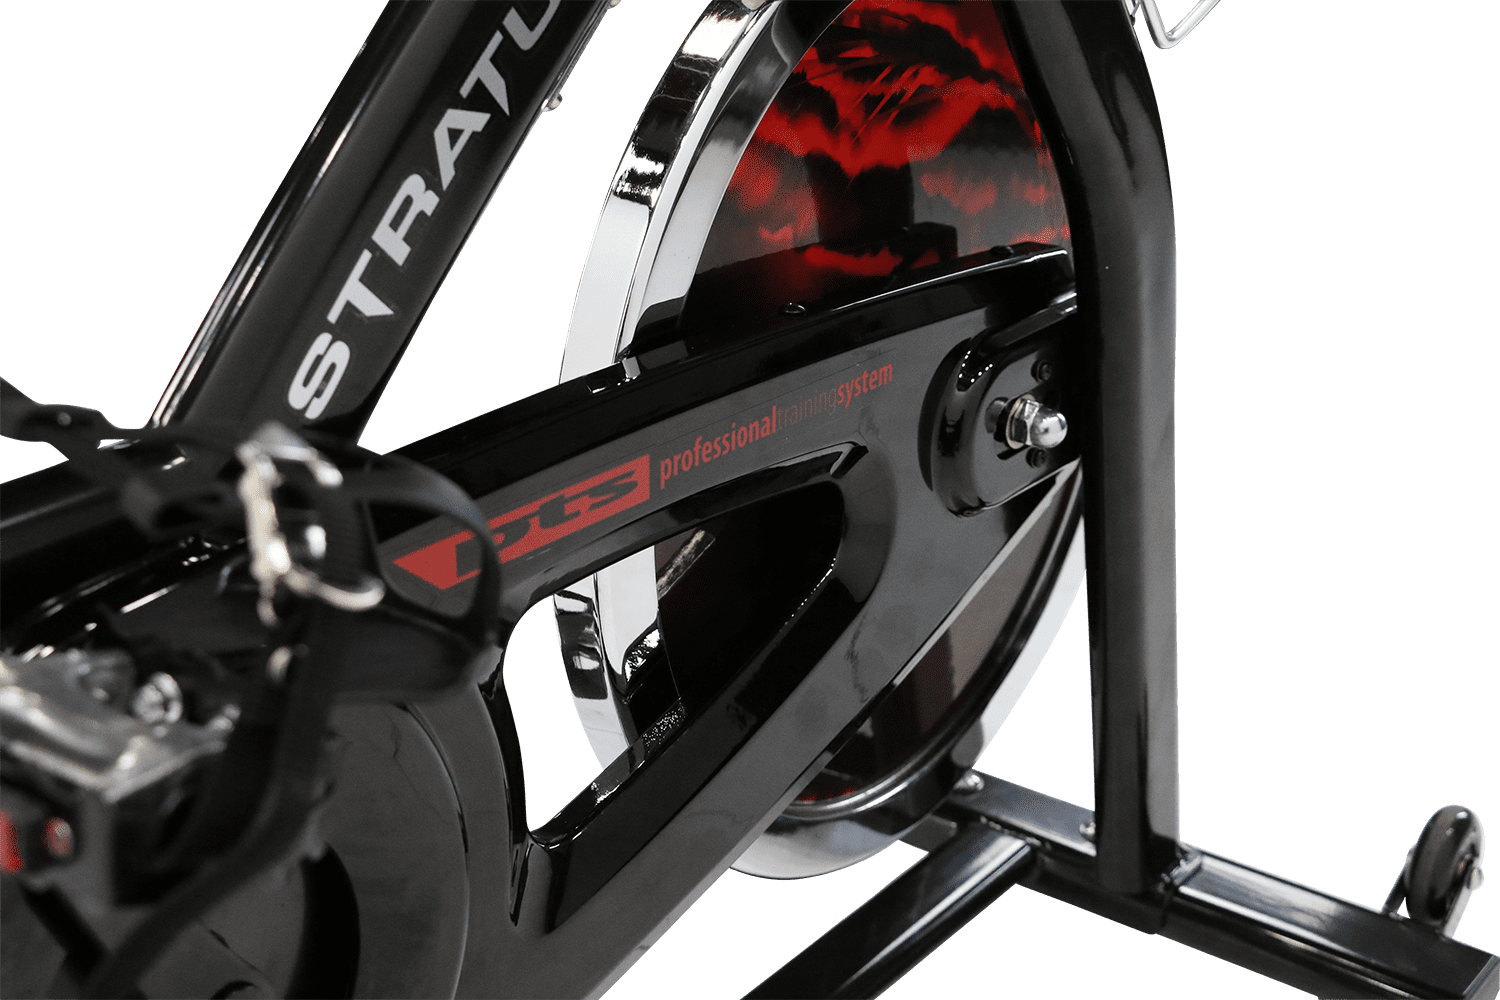 stratum spin bike